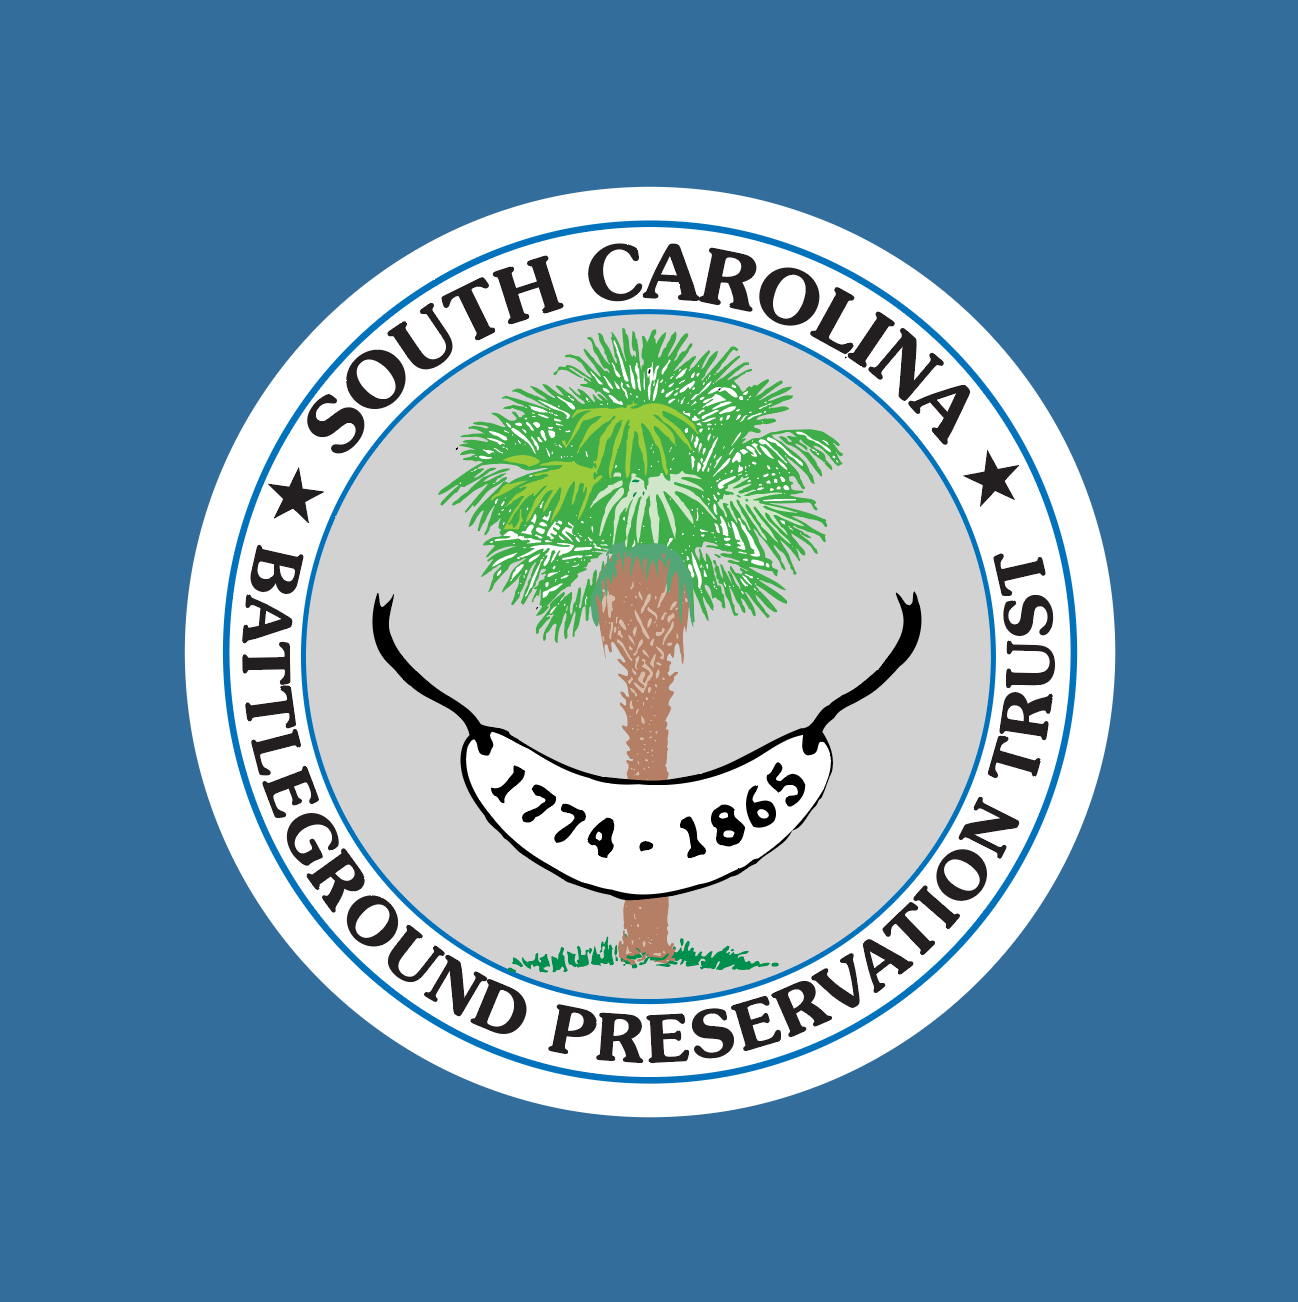 The South Carolina Battleground Preservation Trust